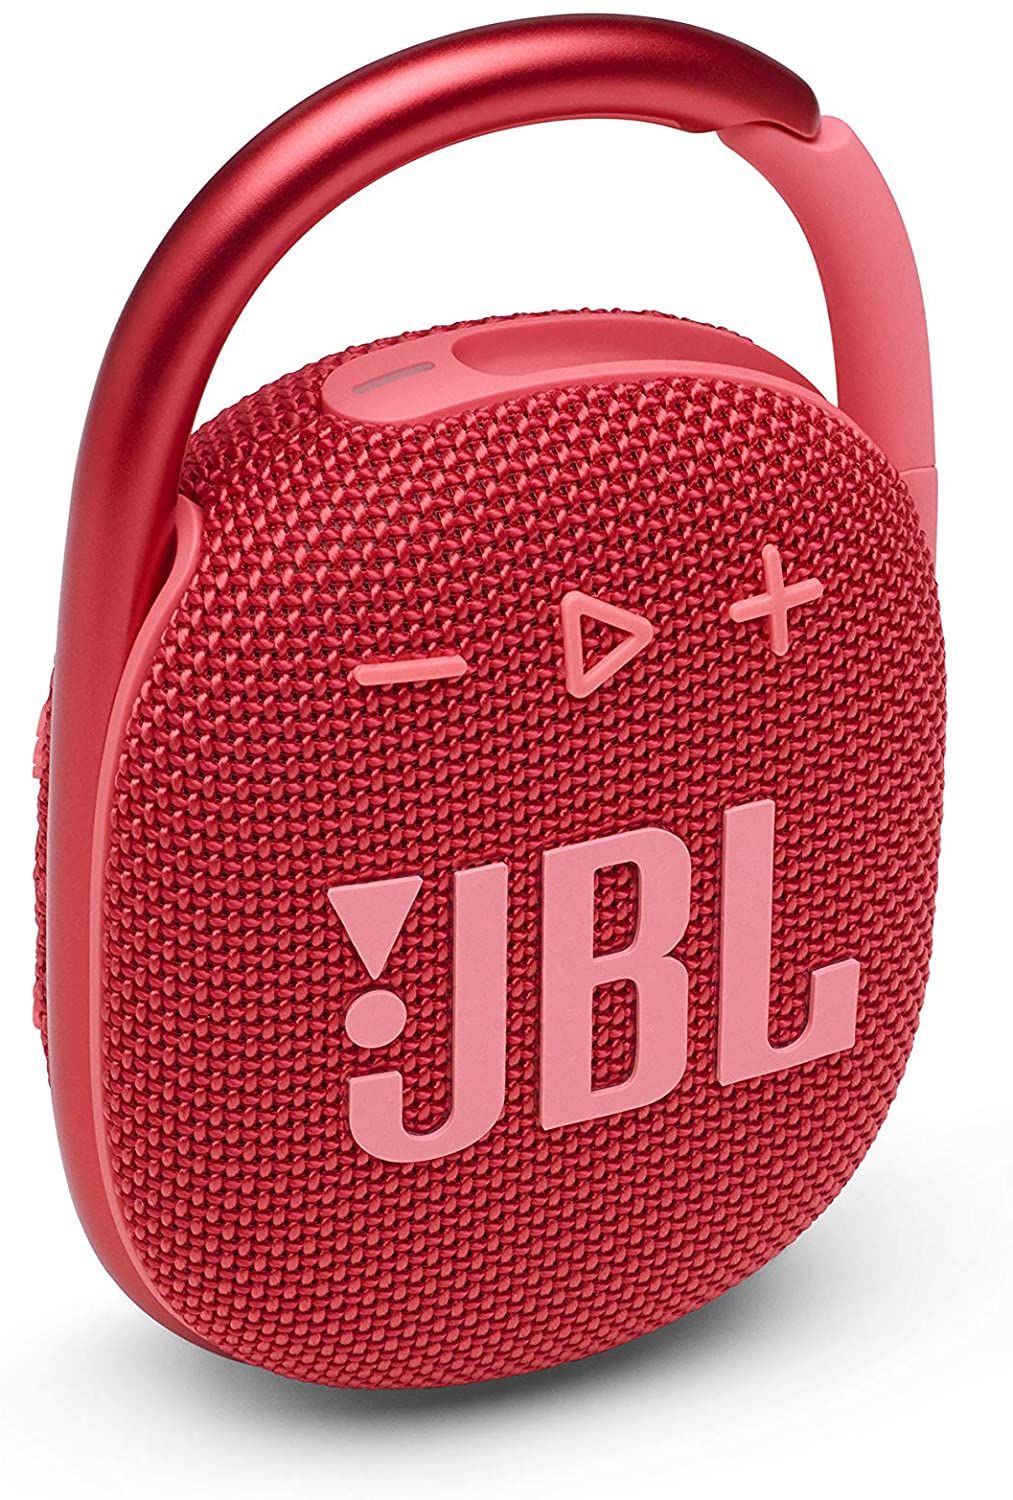 JBL Clip 4 Ultra-portable Waterproof Speaker, Red